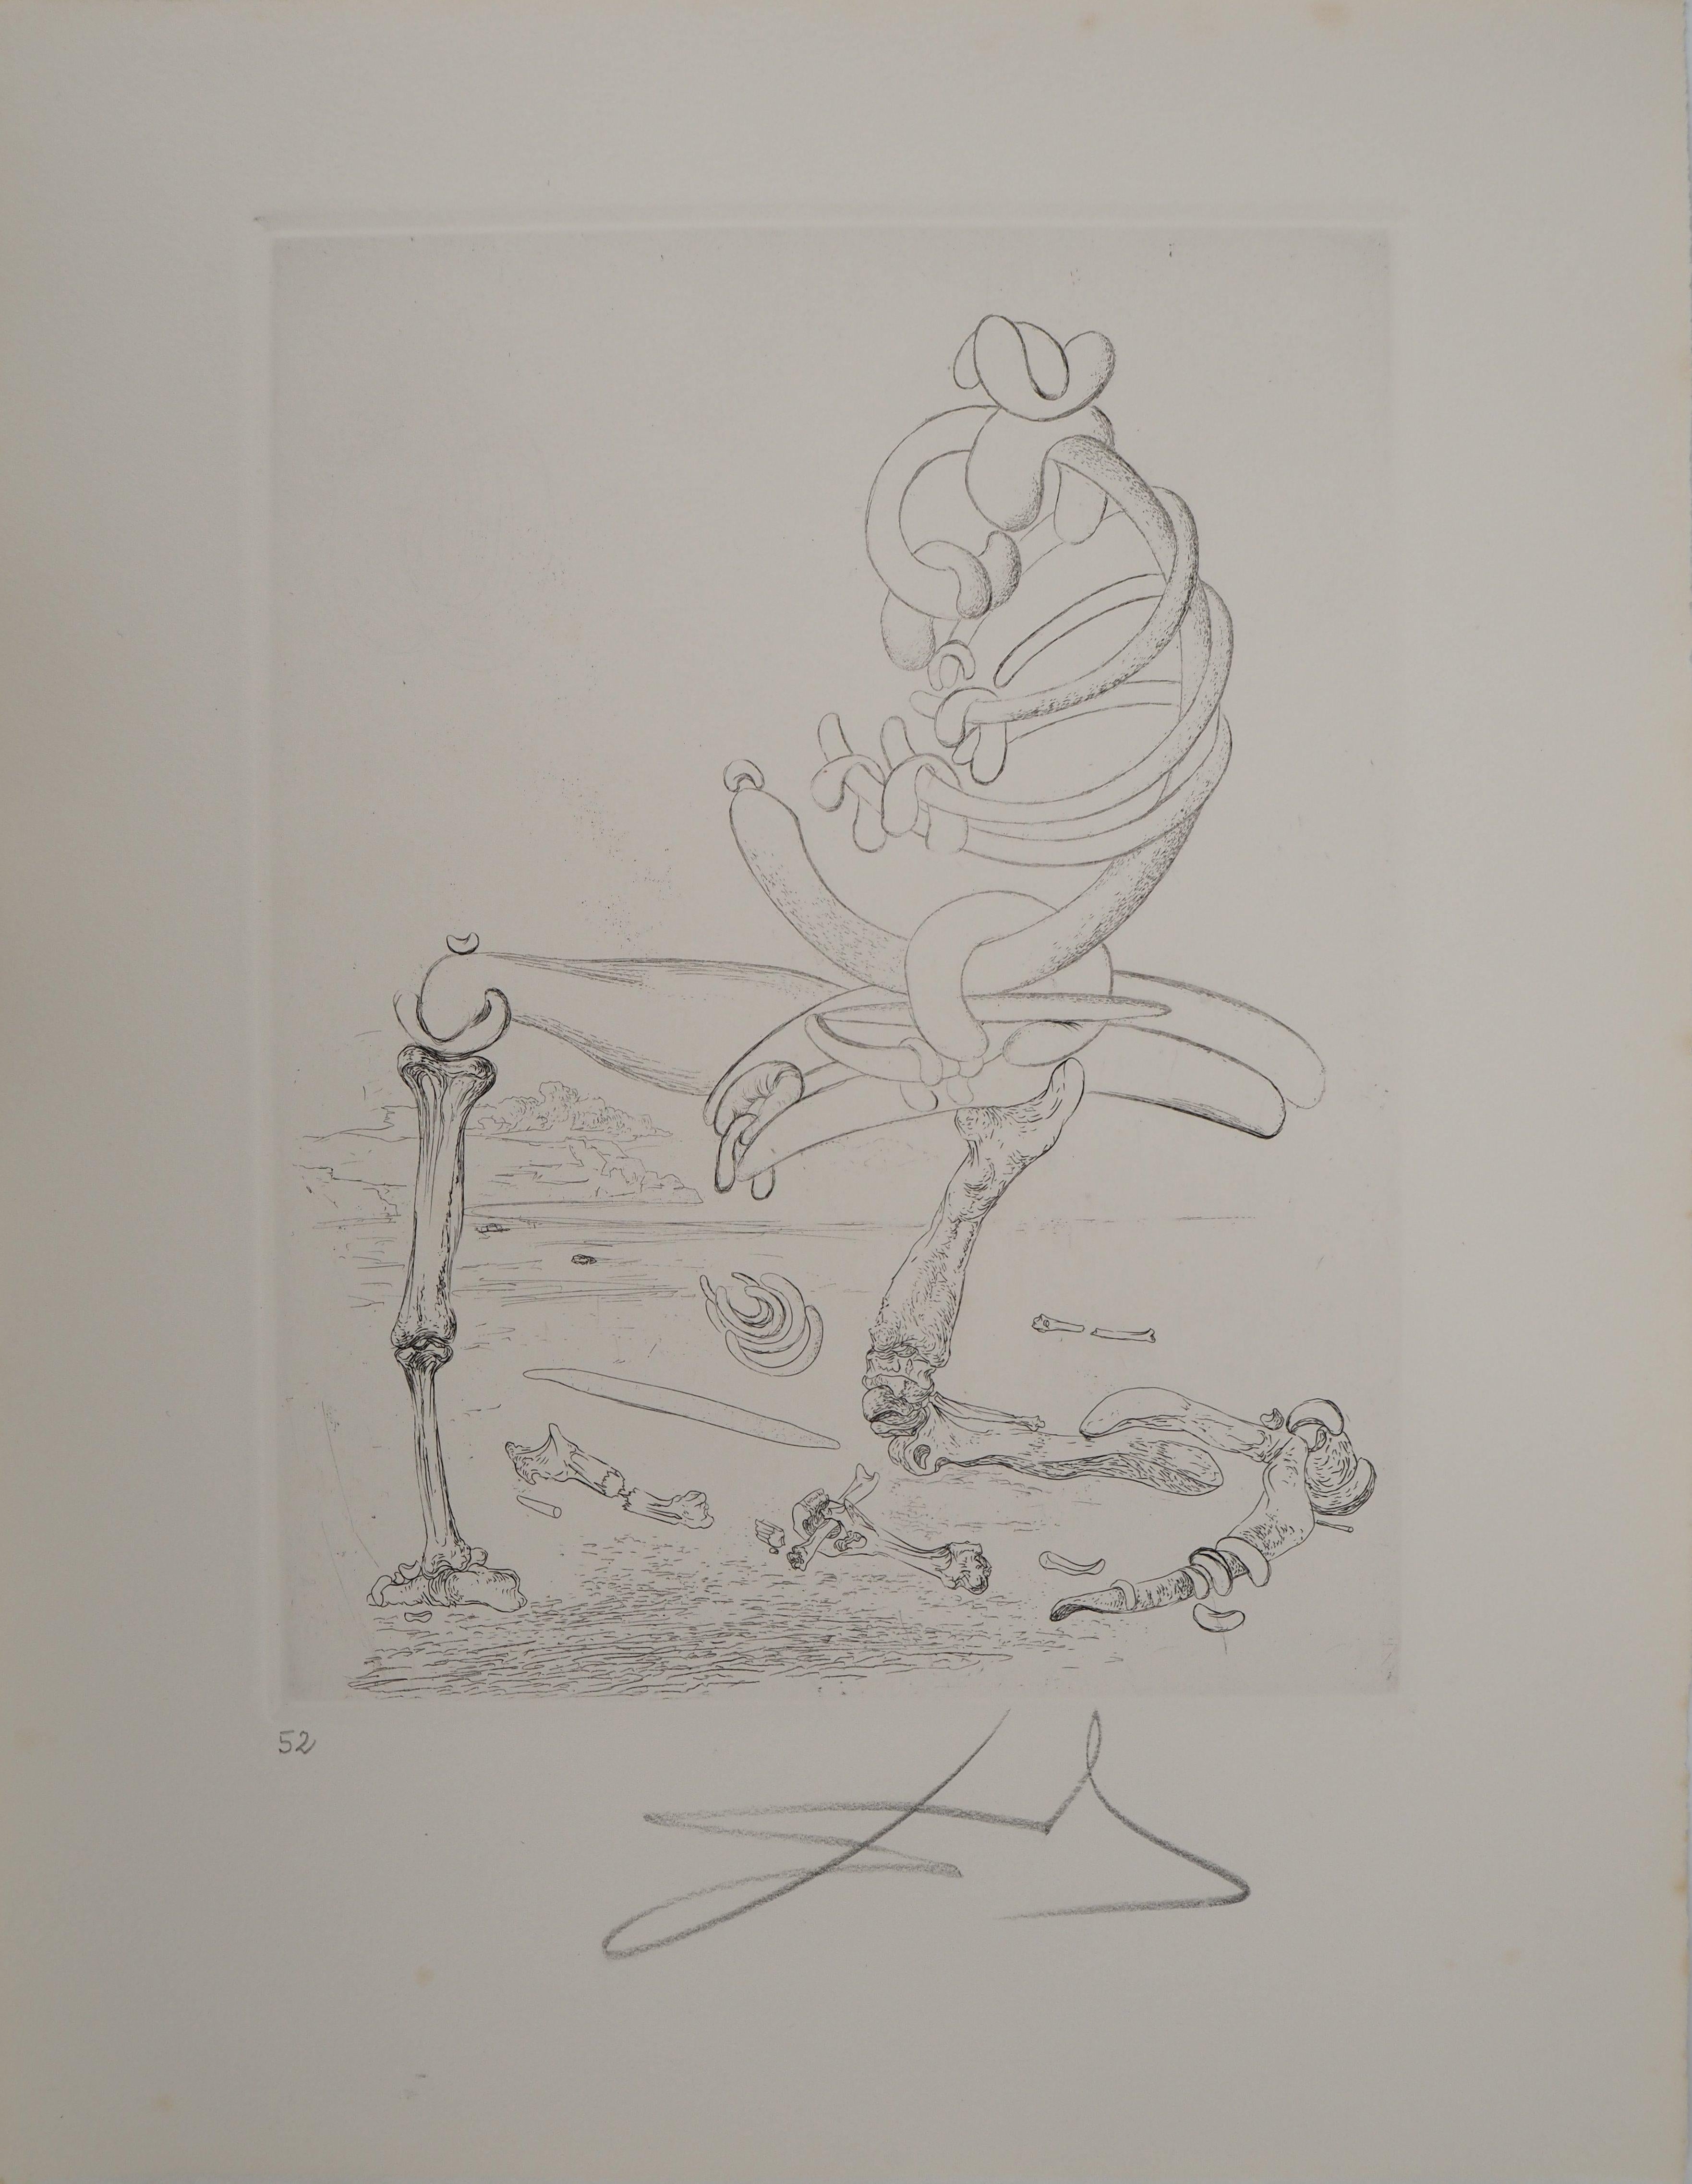 Salvador Dalí Figurative Print - Surrealist Composition with Bones and Beans - Original etching, HANDSIGNED, 1975